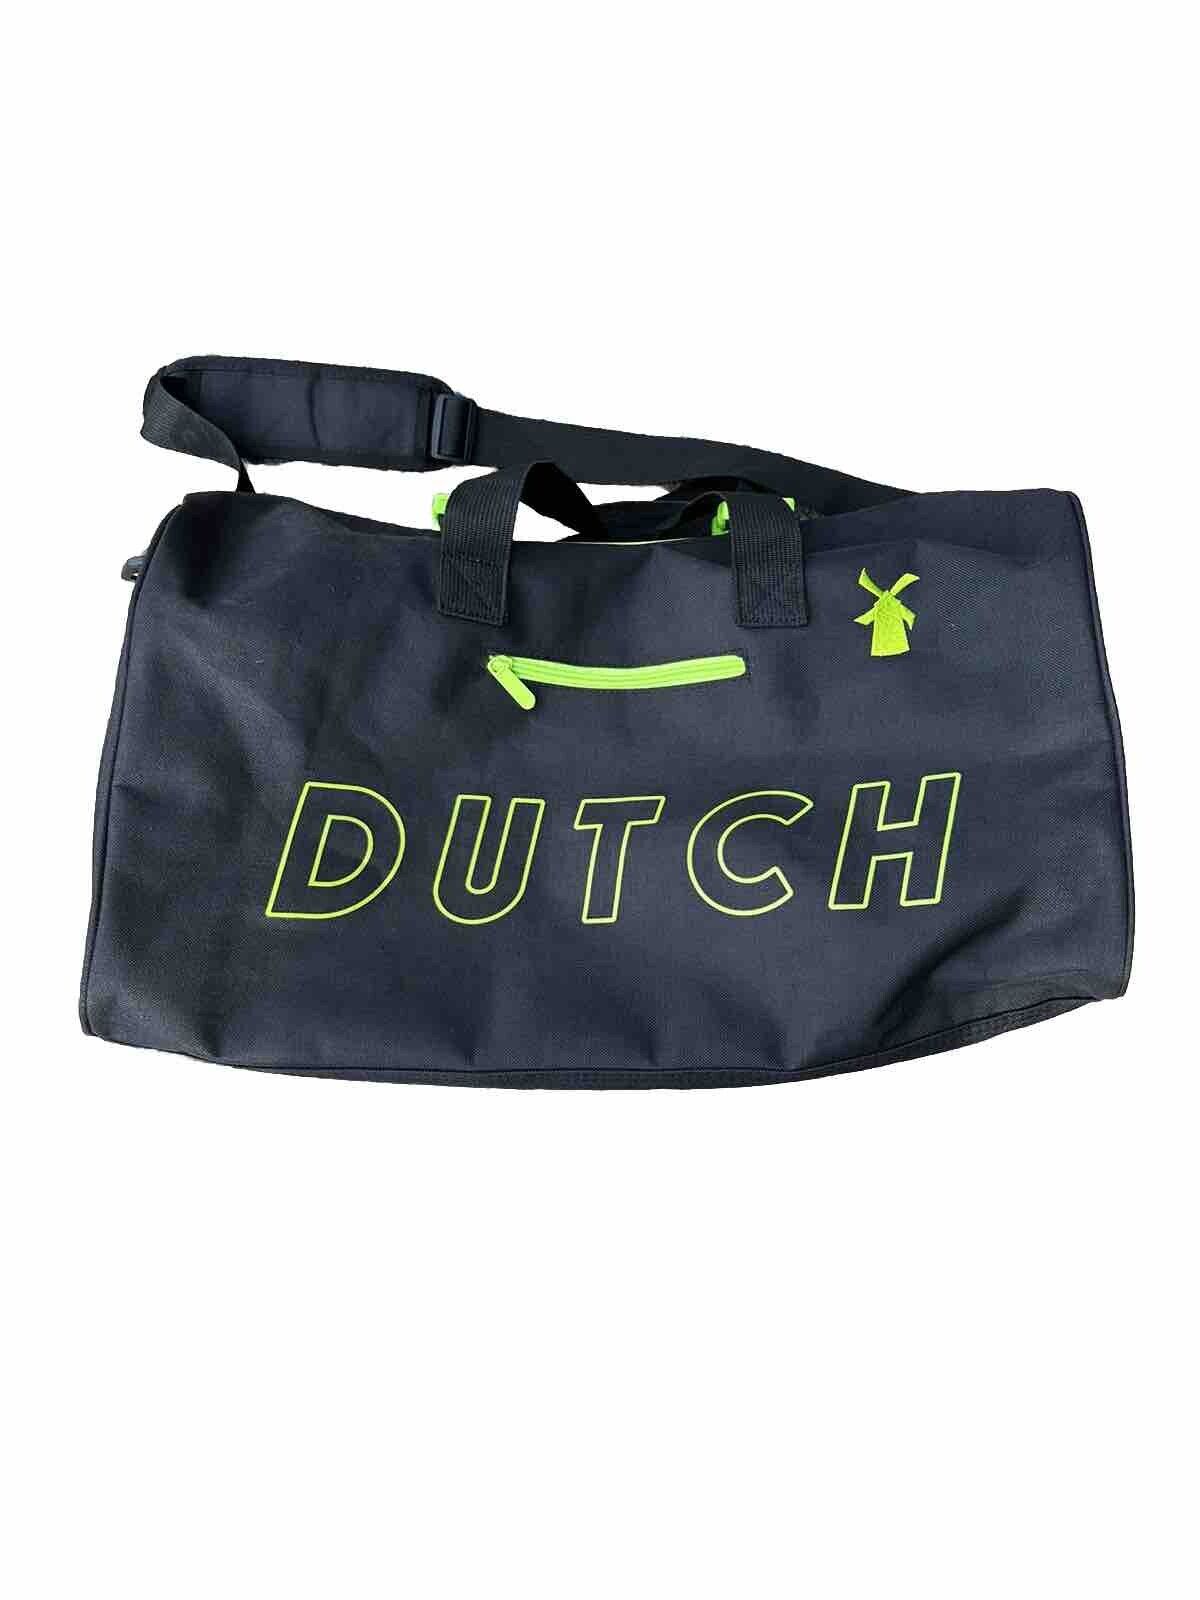 Vintage Dutch Bros Coffee Neon Green & Black Duffle Bag With Shoe Bag